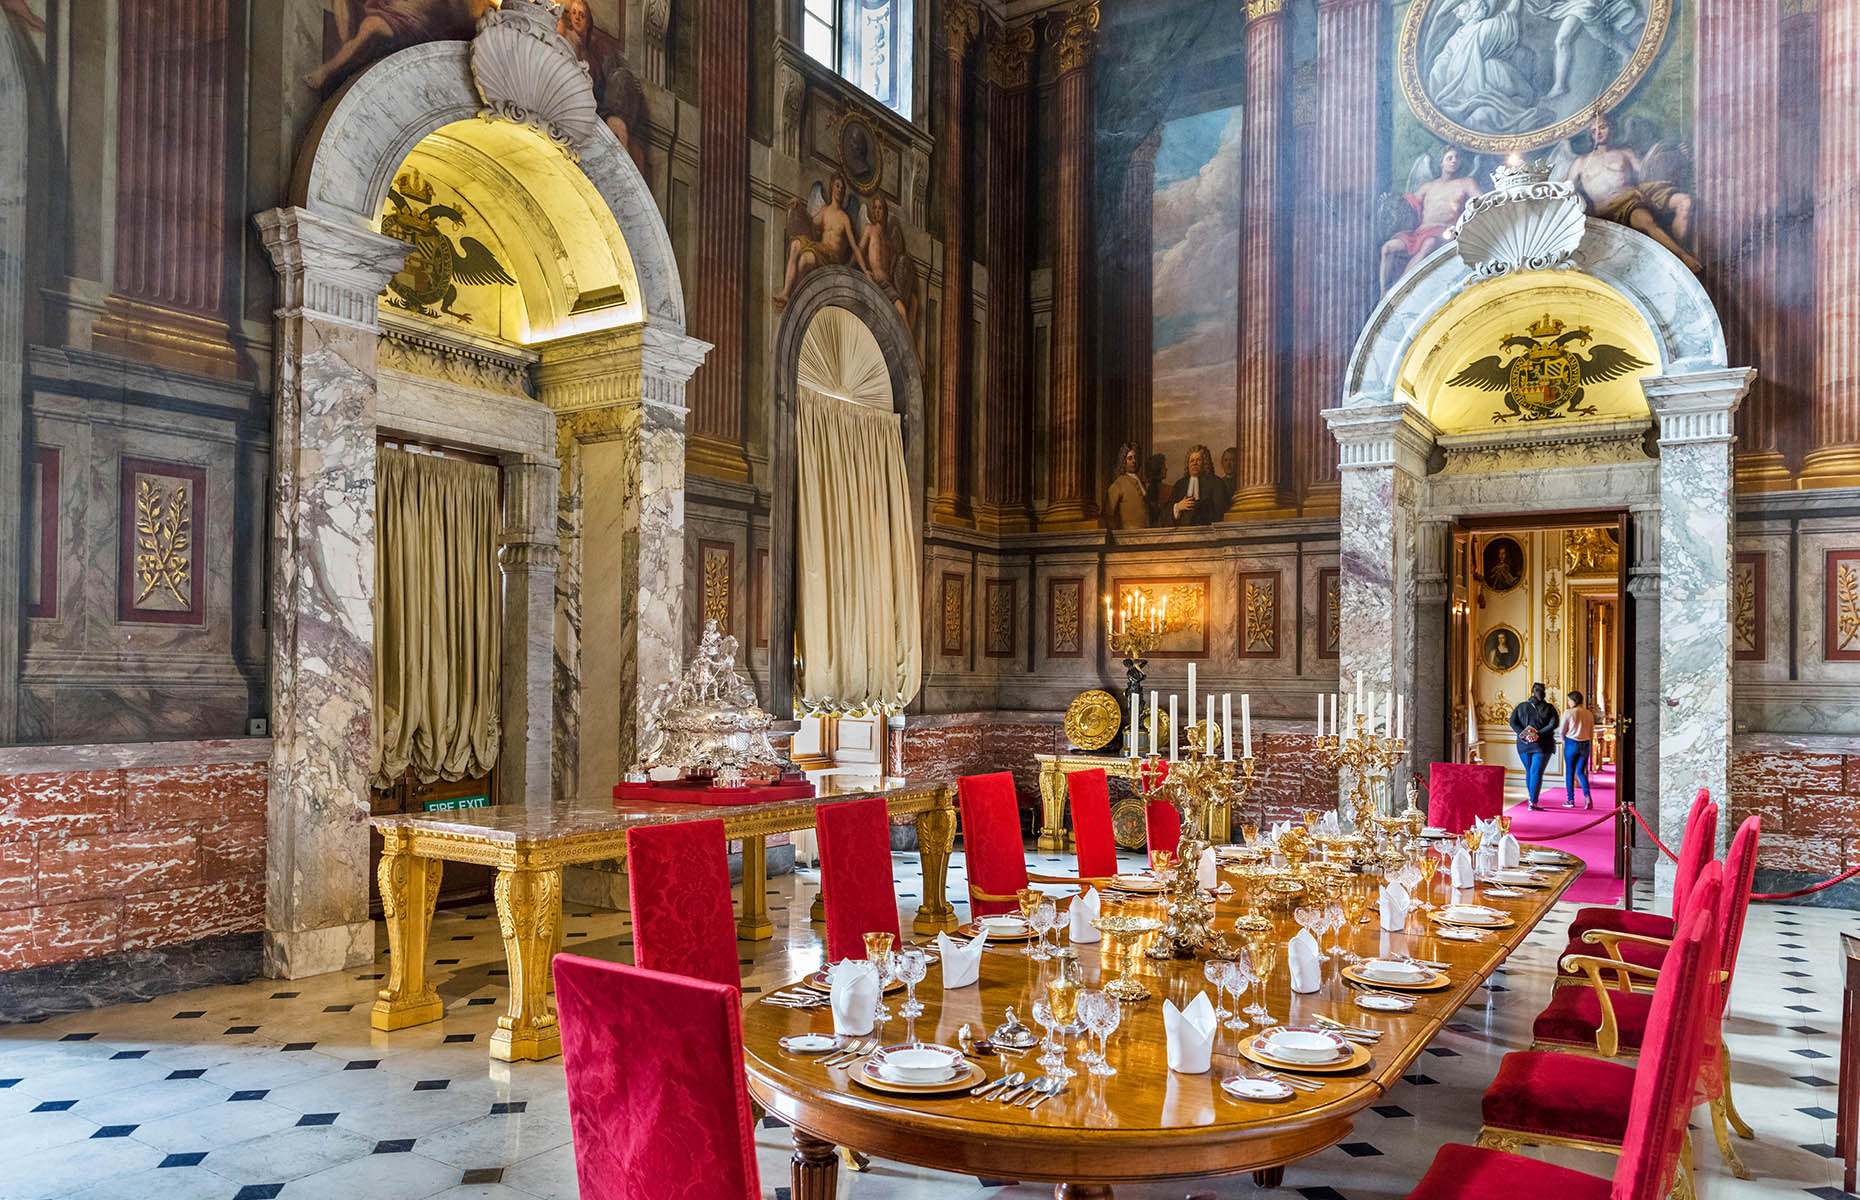 The Dining Room at Blenheim Palace (Ian Dagnall/Alamy Stock Photo)